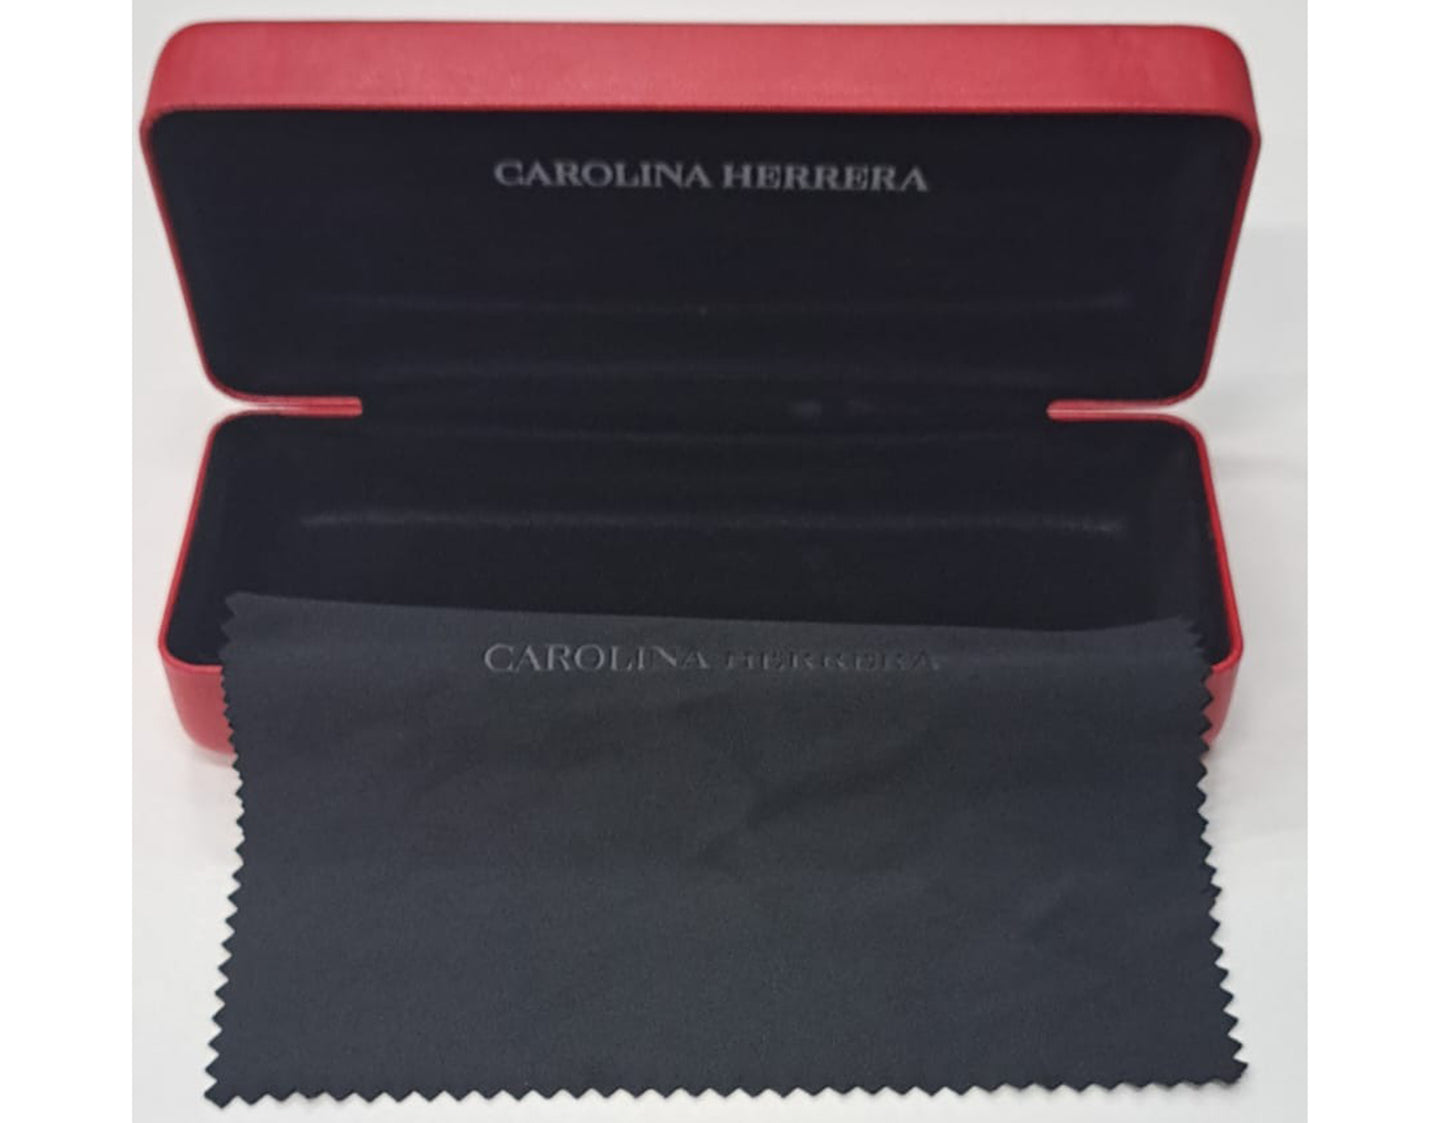 Carolina Herrera VHE635K-0M61 53mm New Eyeglasses